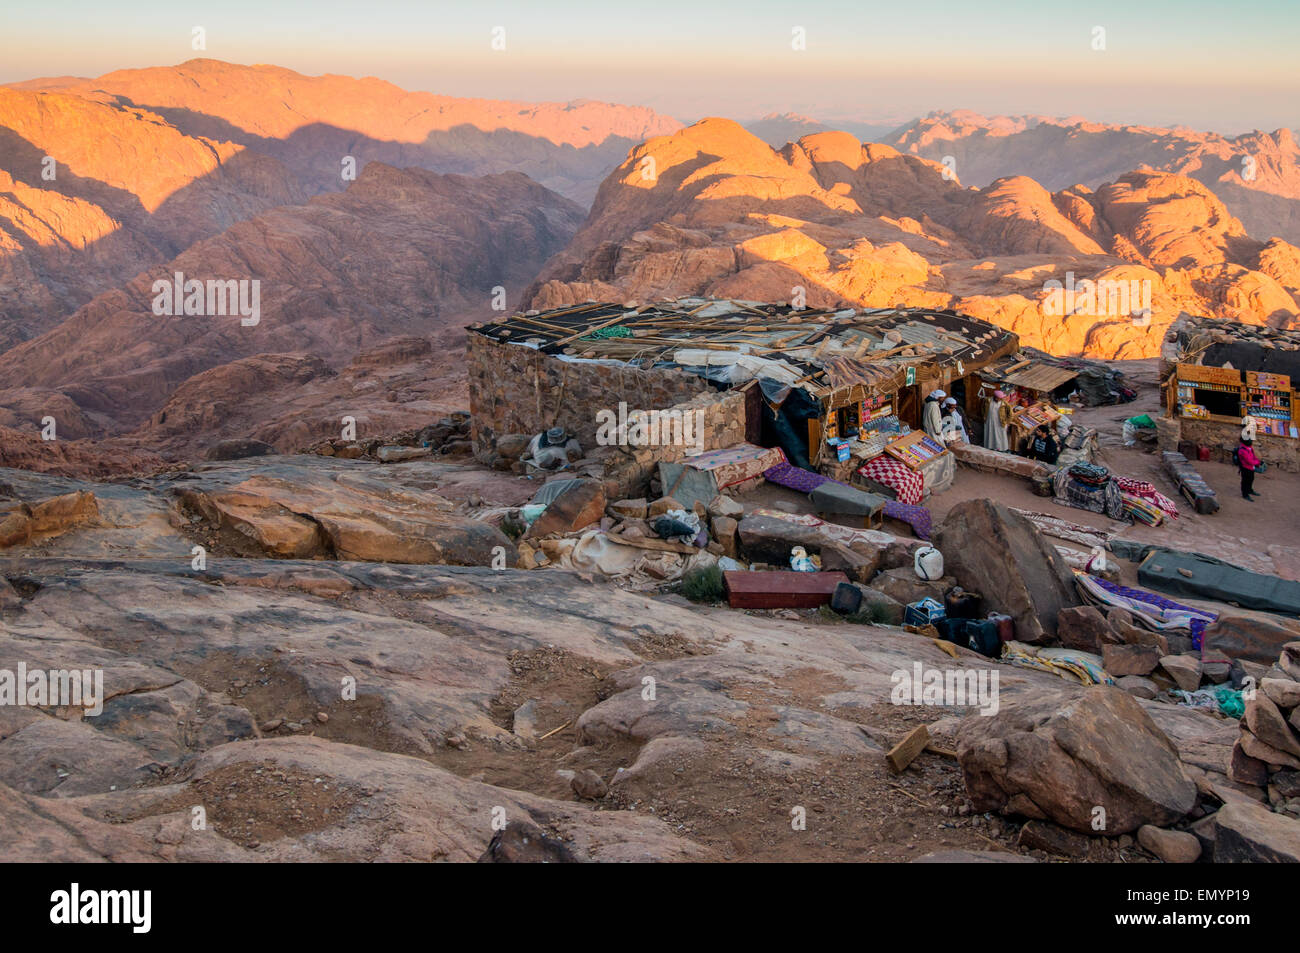 Arab Bedouin Shops on Mount Sinai in early morning Stock Photo